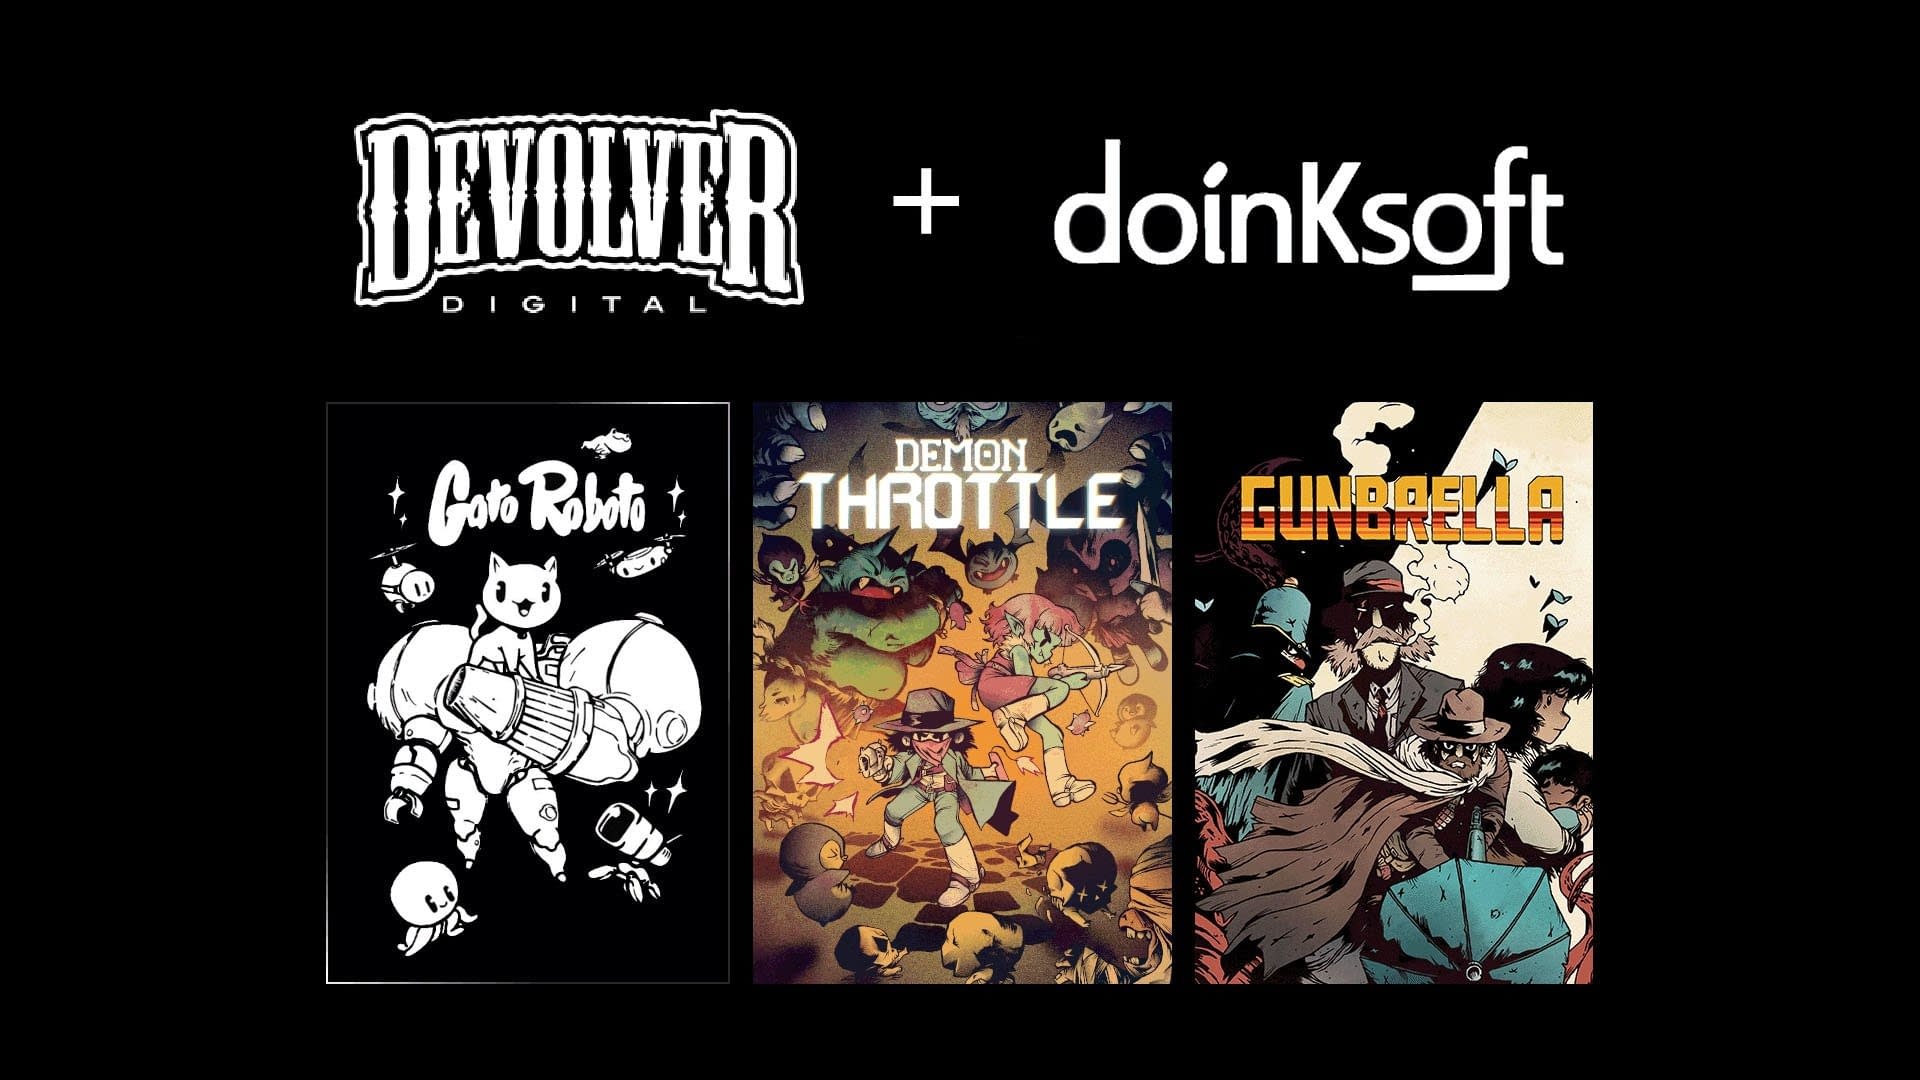 Devolver Digital purchased Doinksoft studio